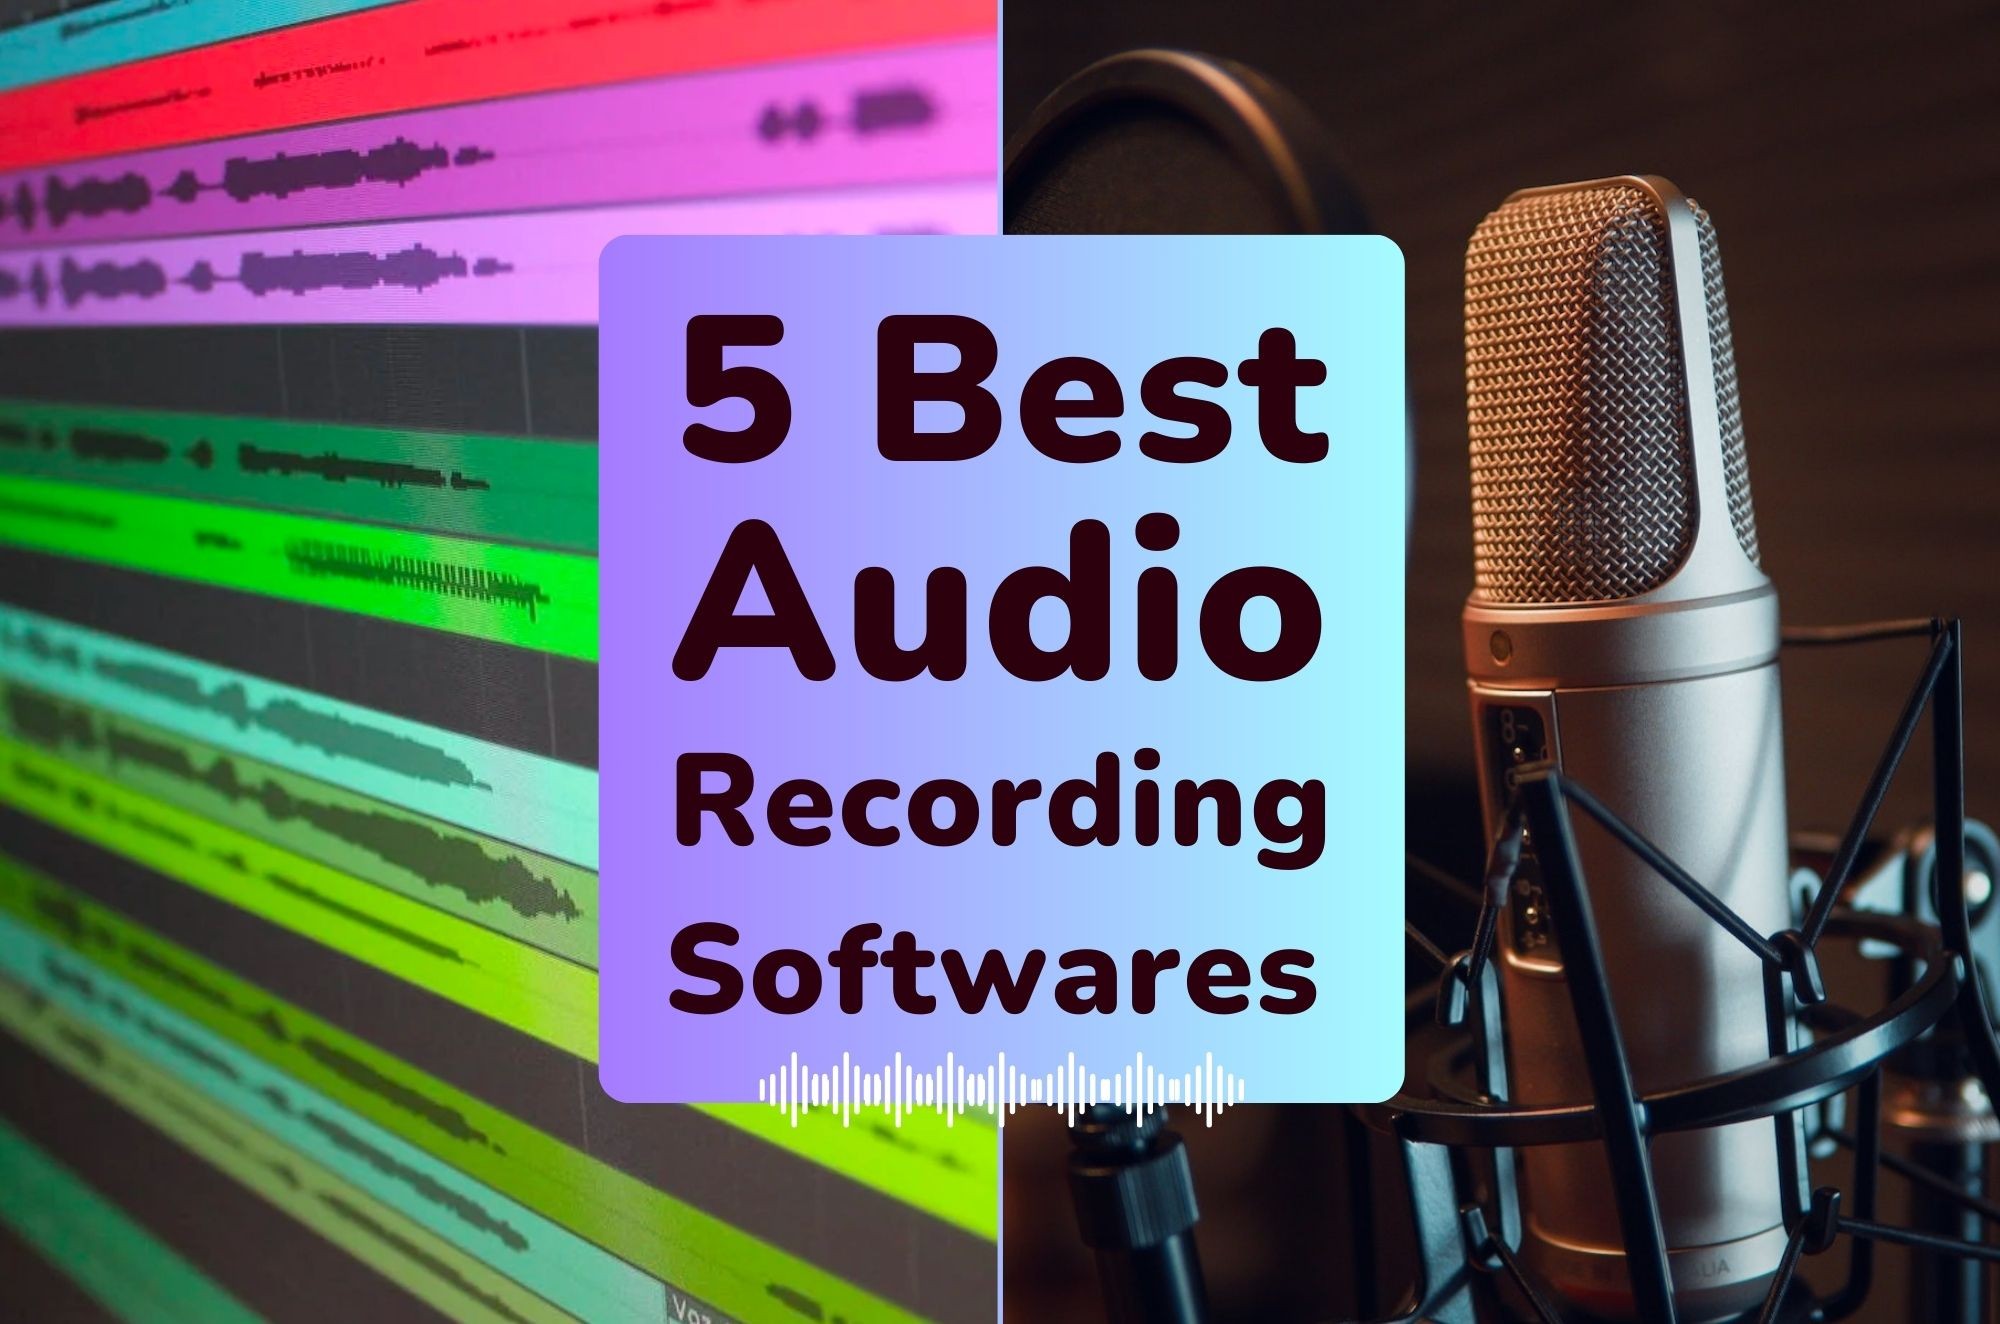 Download digital recording studio free – SOUND FORGE Audio Studio